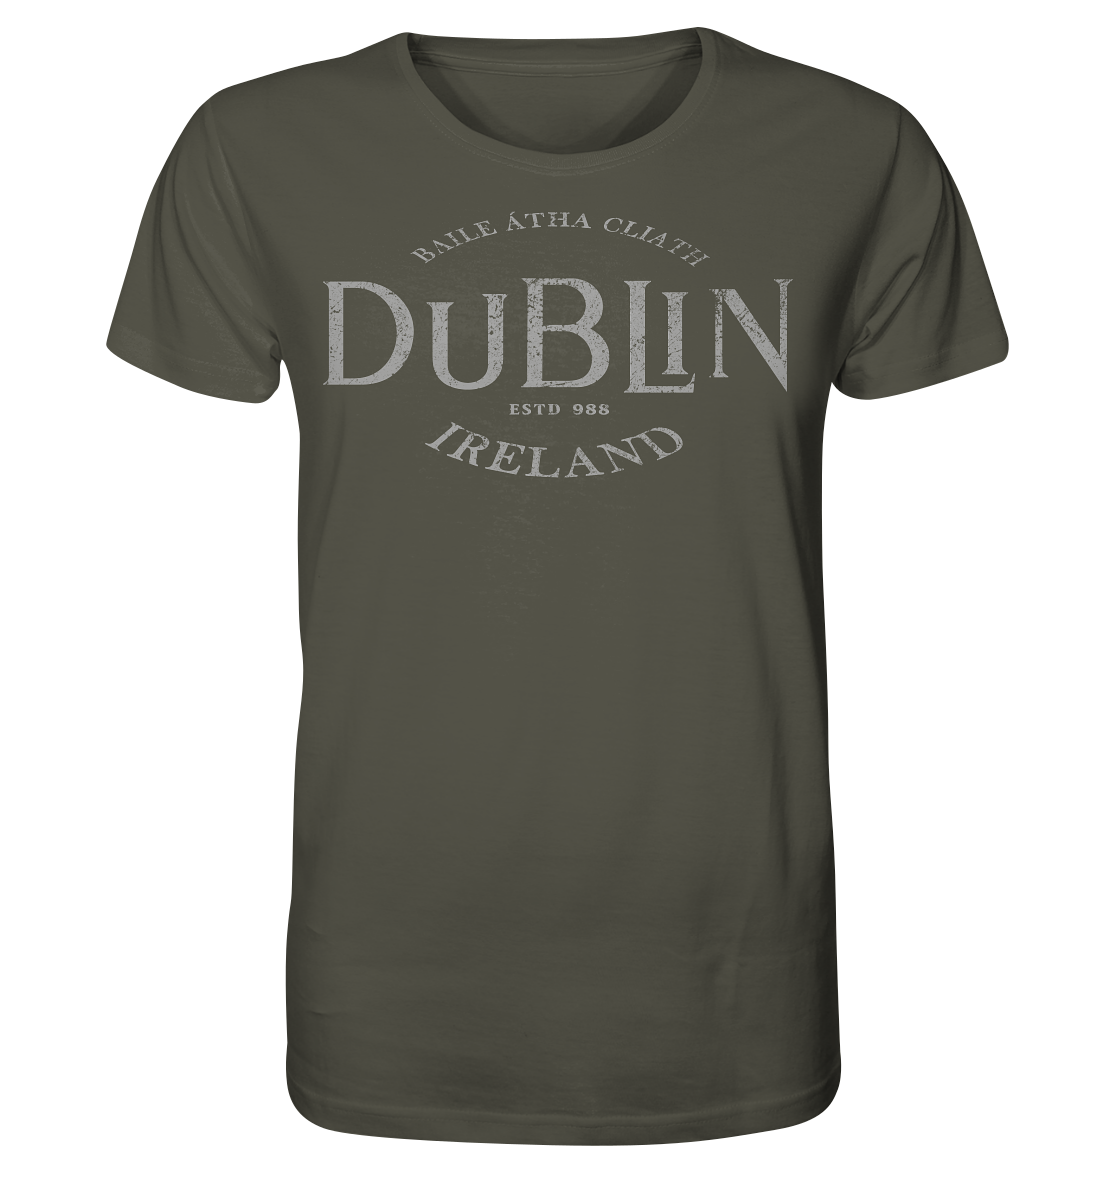 Dublin "Ireland / Baile Átha Cliath / Estd 988" - Organic Shirt